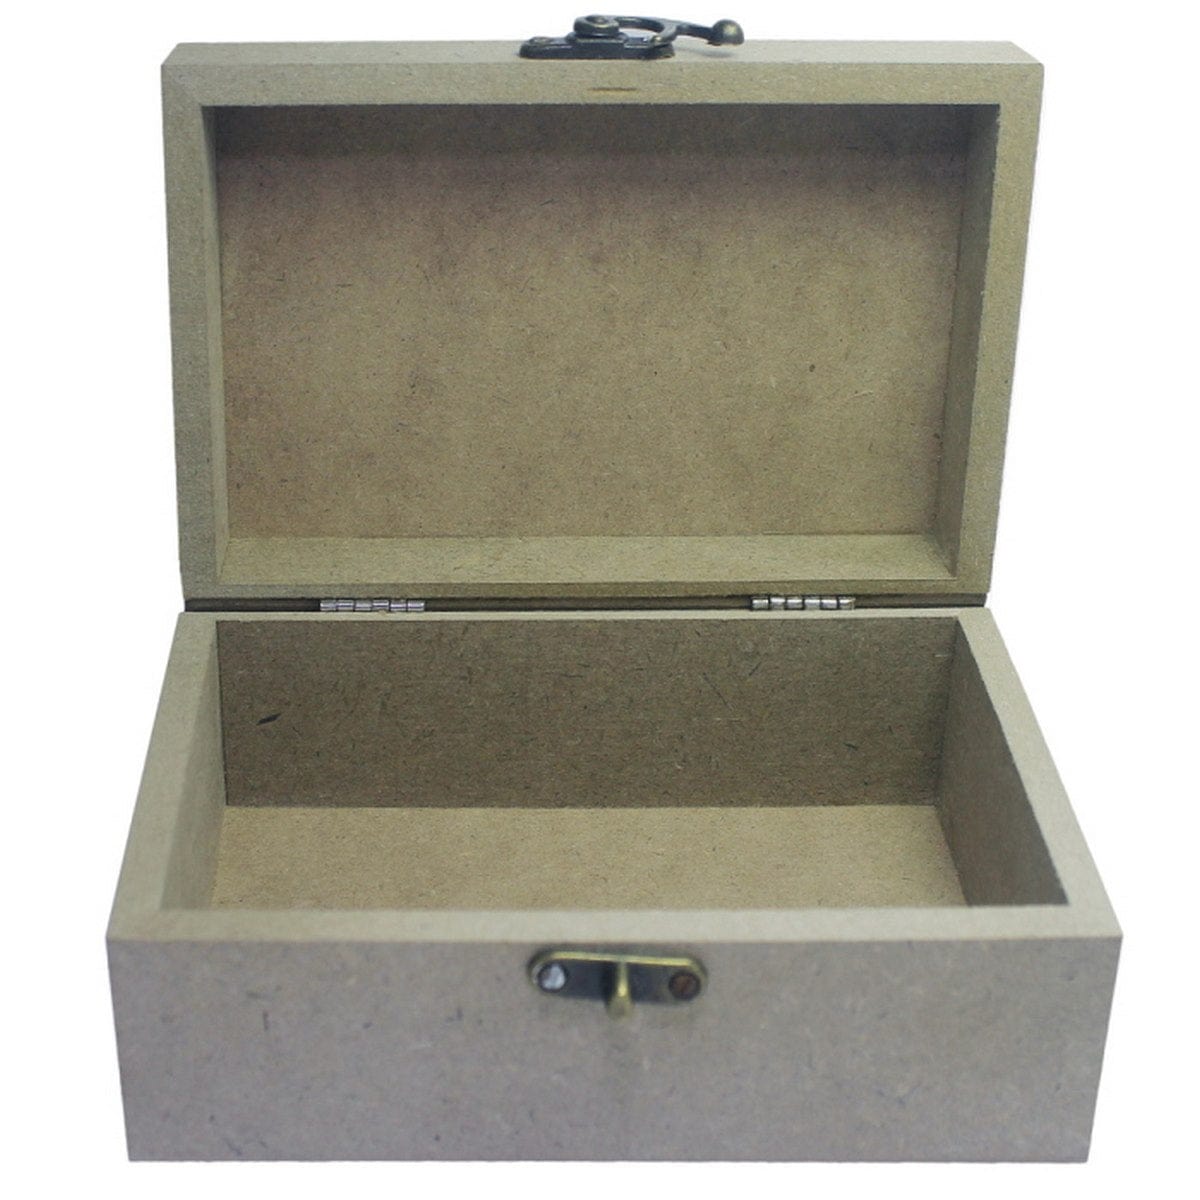 jags-mumbai MDF Mdf box For DIY Art & Craft (8in X 6in X 3in)- Contain 1 Unit Box